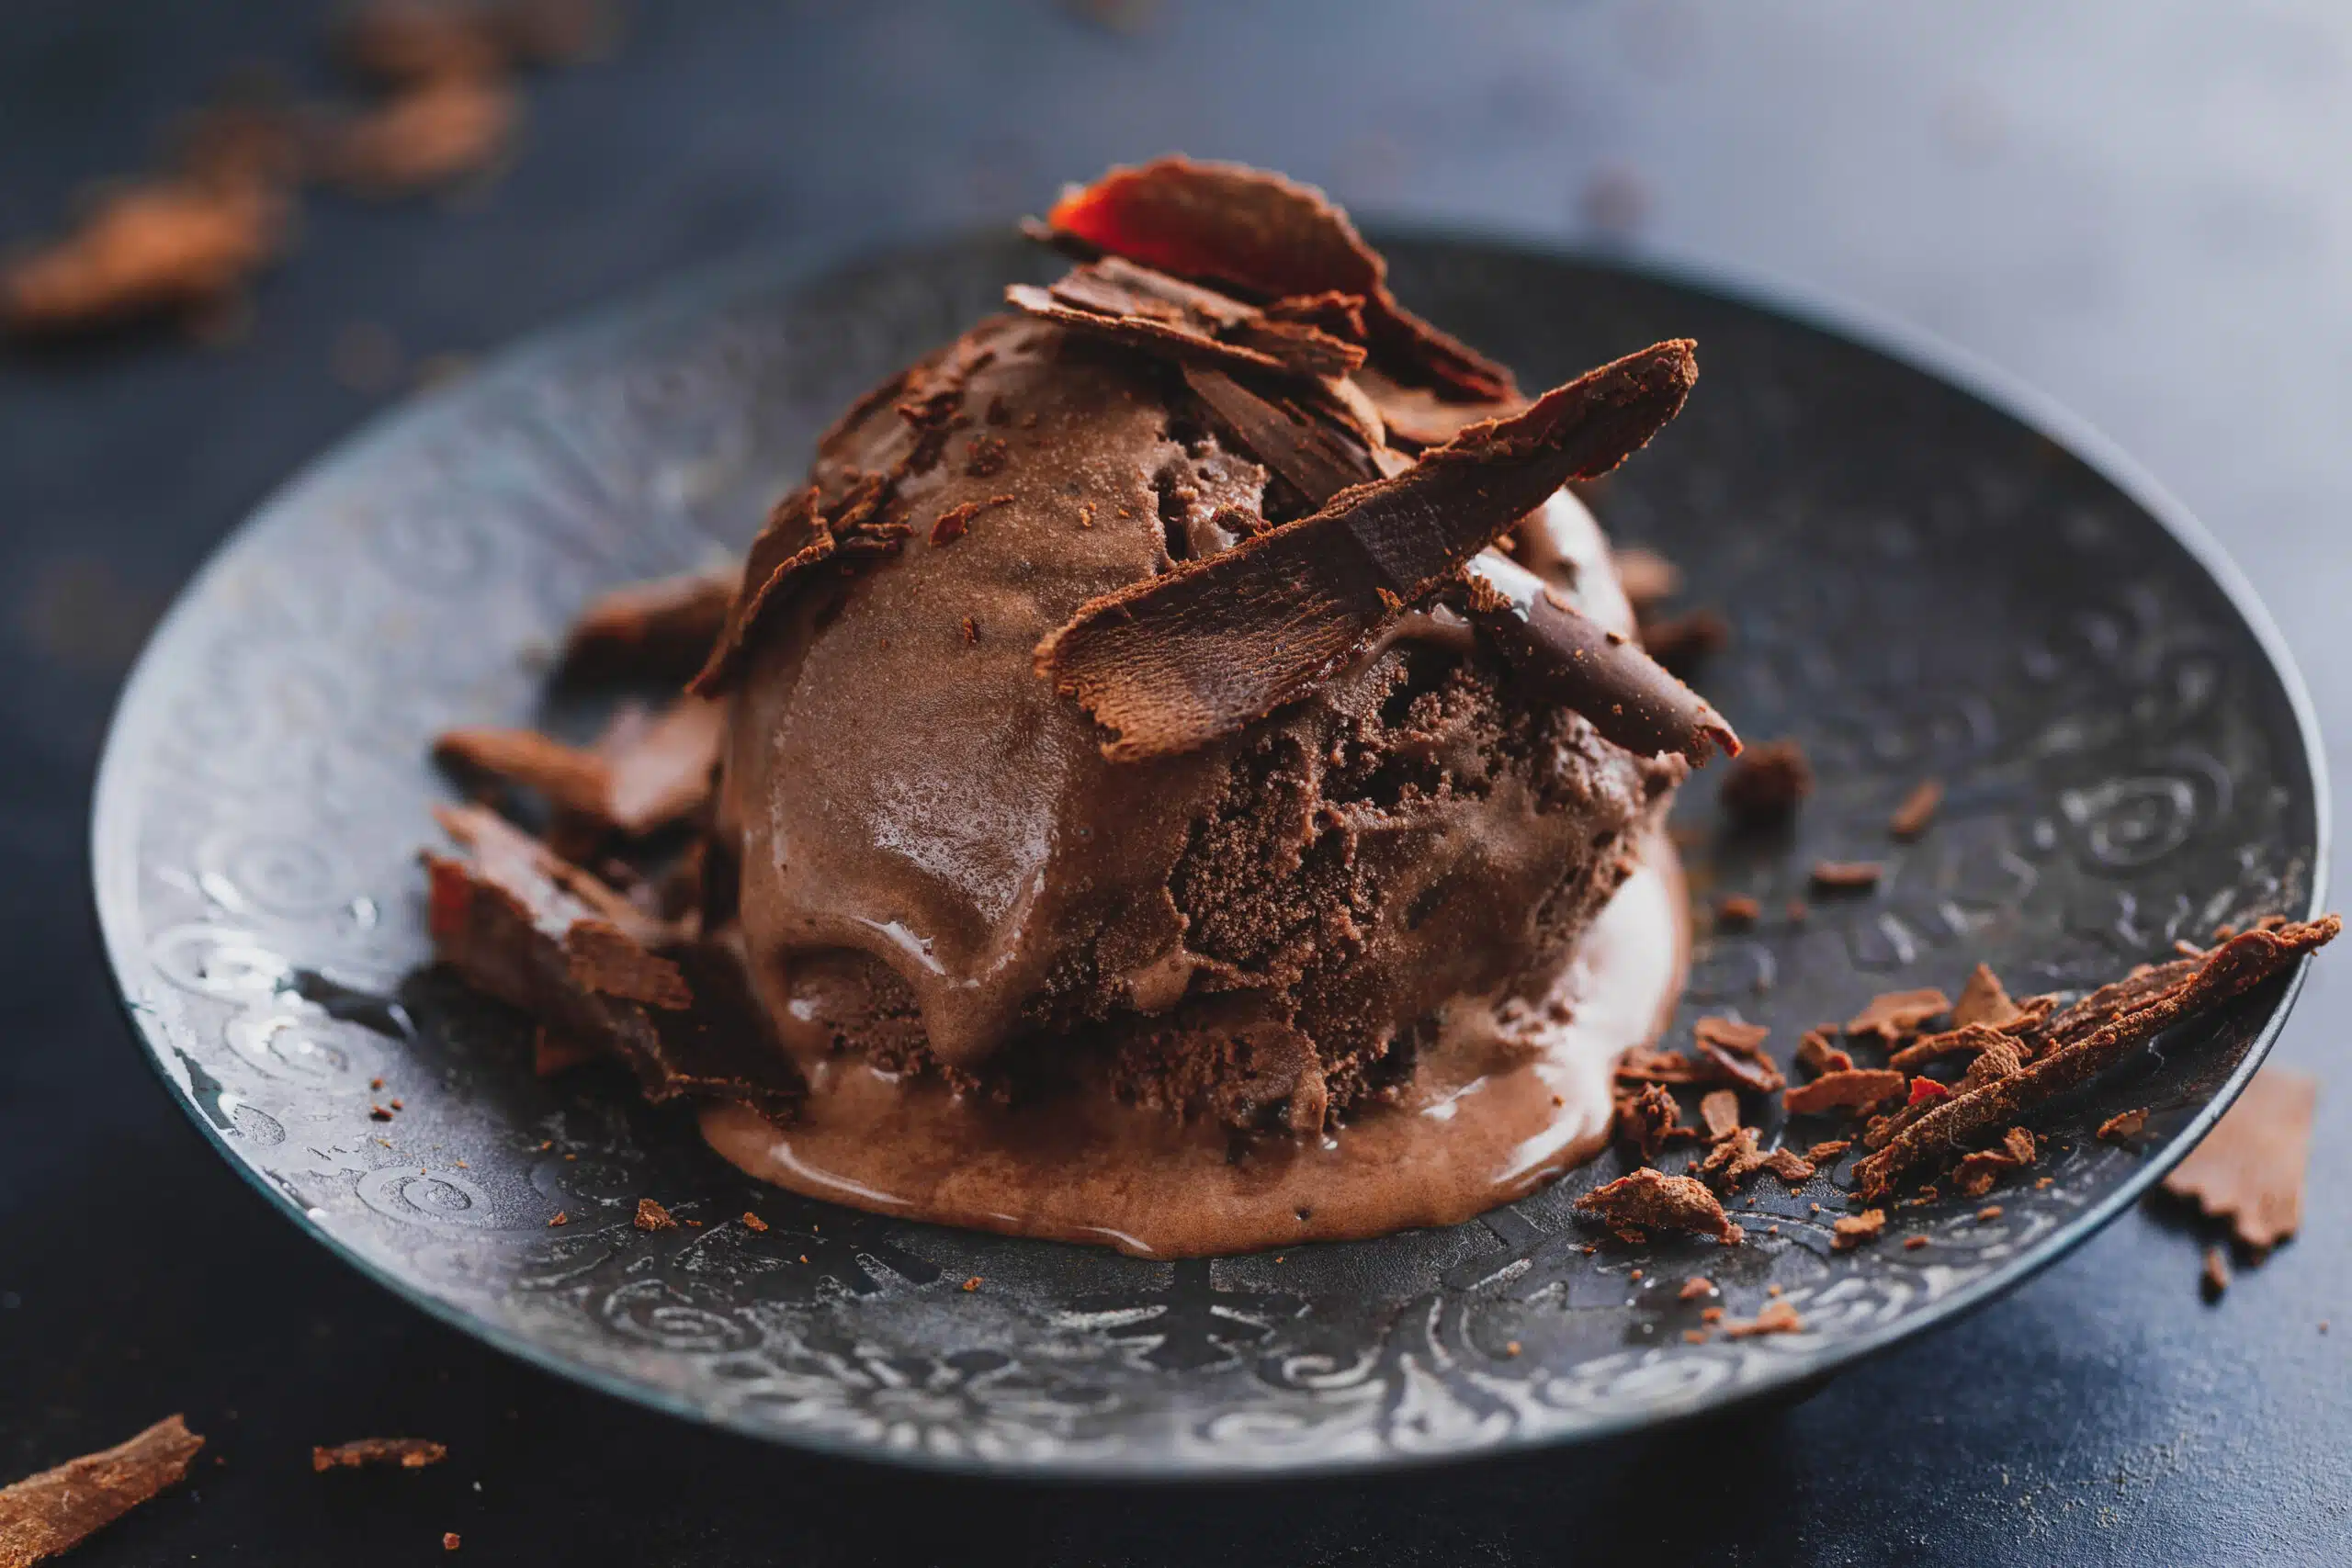 Tasty appetizing chocolate ice cream with chocolate chunks on dark plate on dark background.